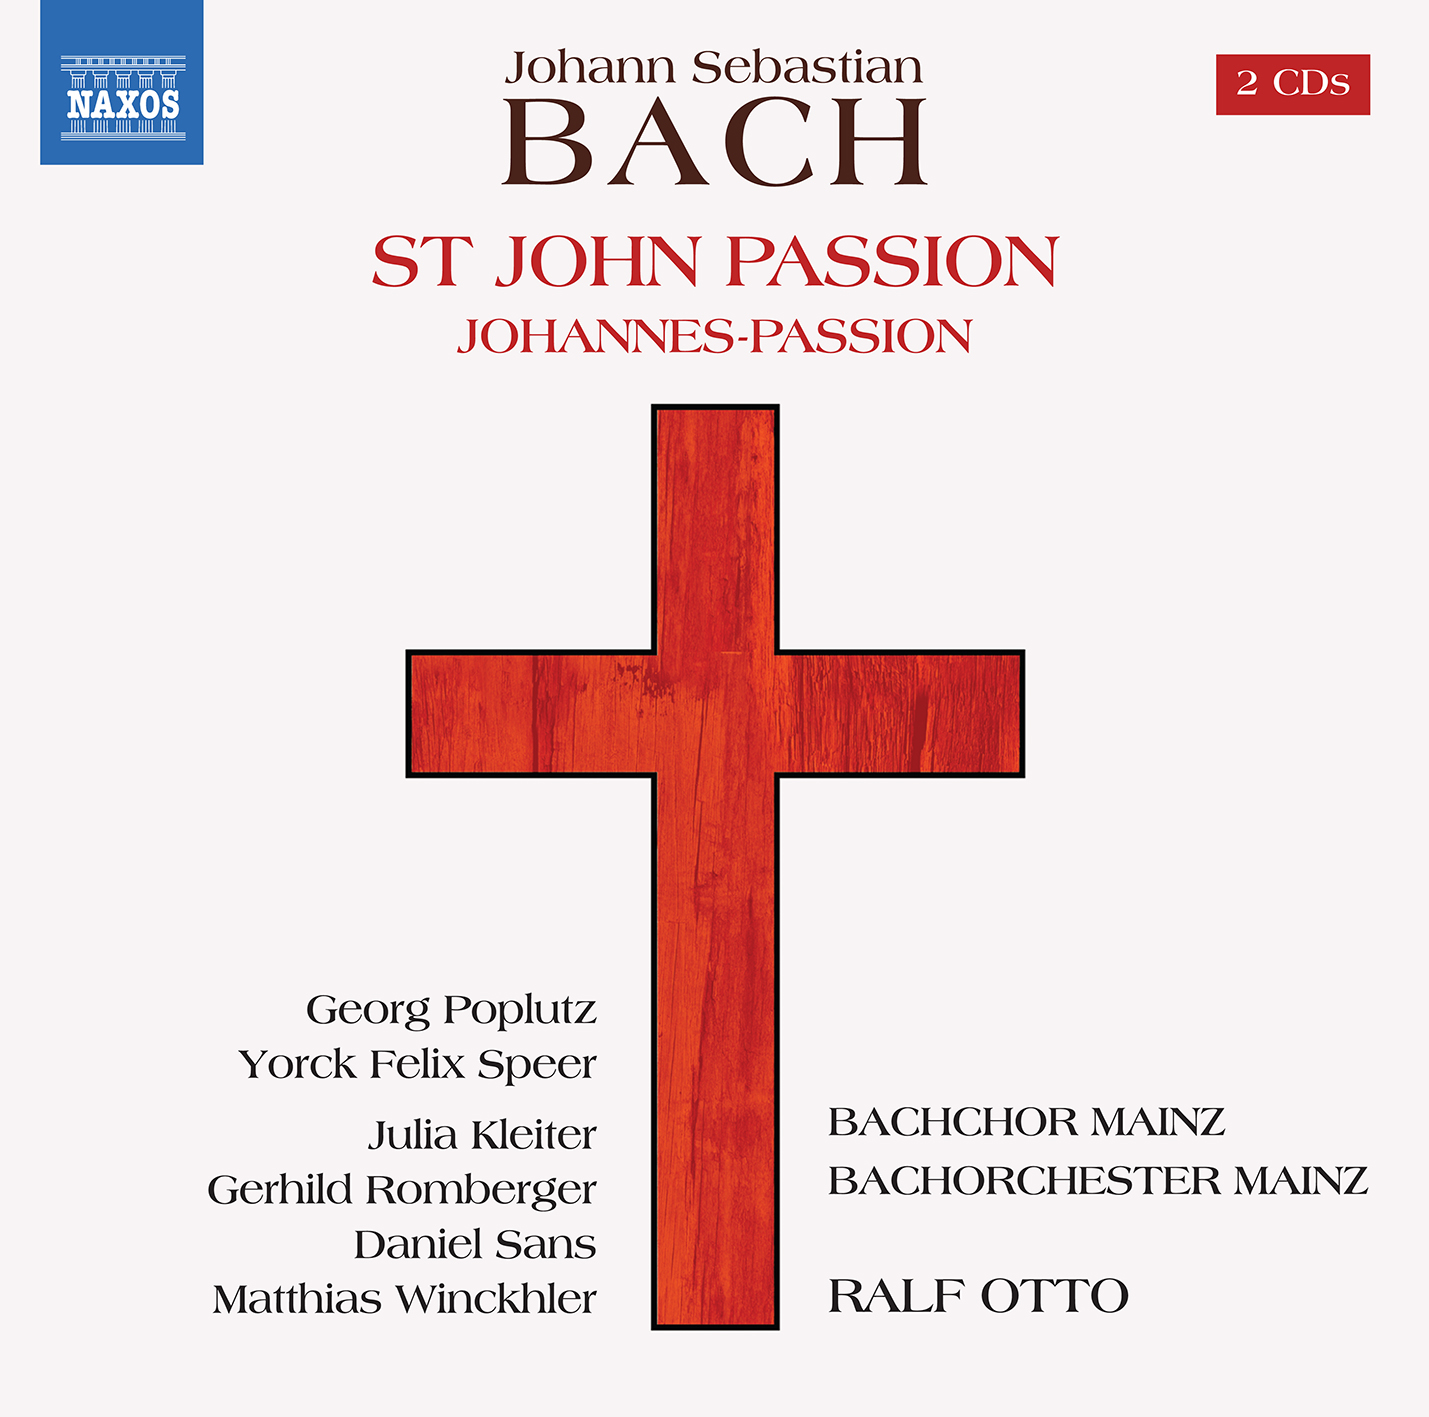 Johann Sebastian Bach, Johannes-Passion BWV 245